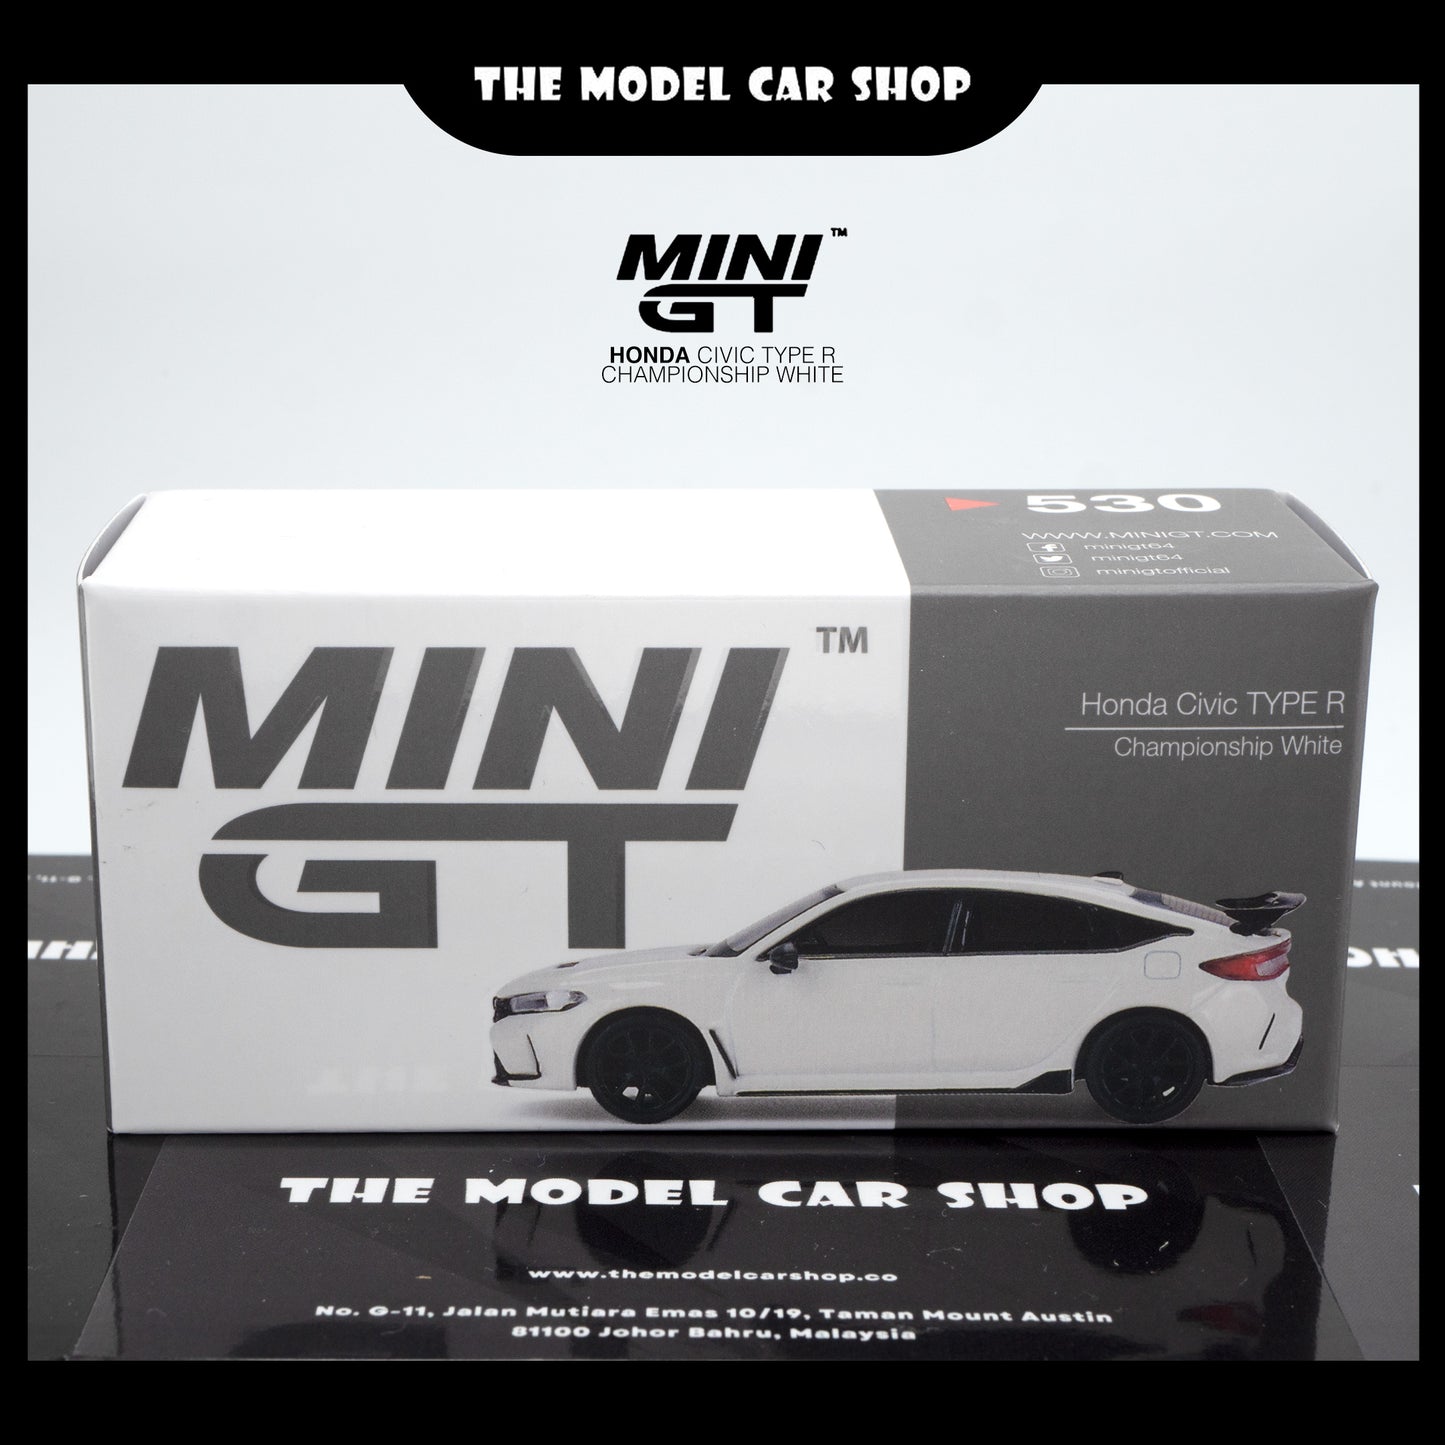 [MINI GT] Honda Civic Type R - Championship White